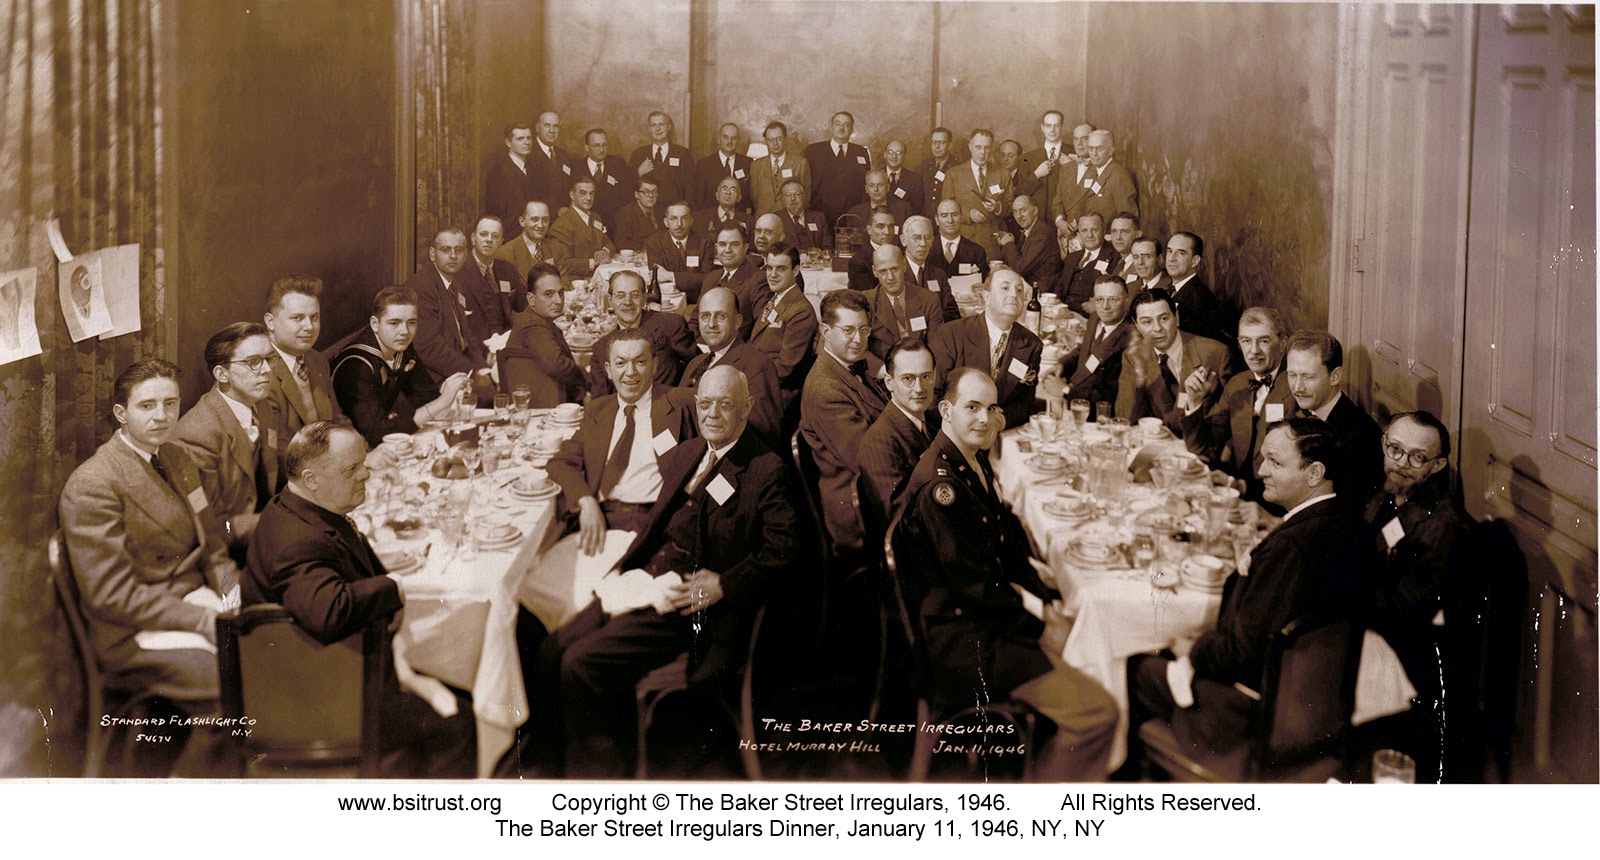 The 1946 BSI Dinner group photo